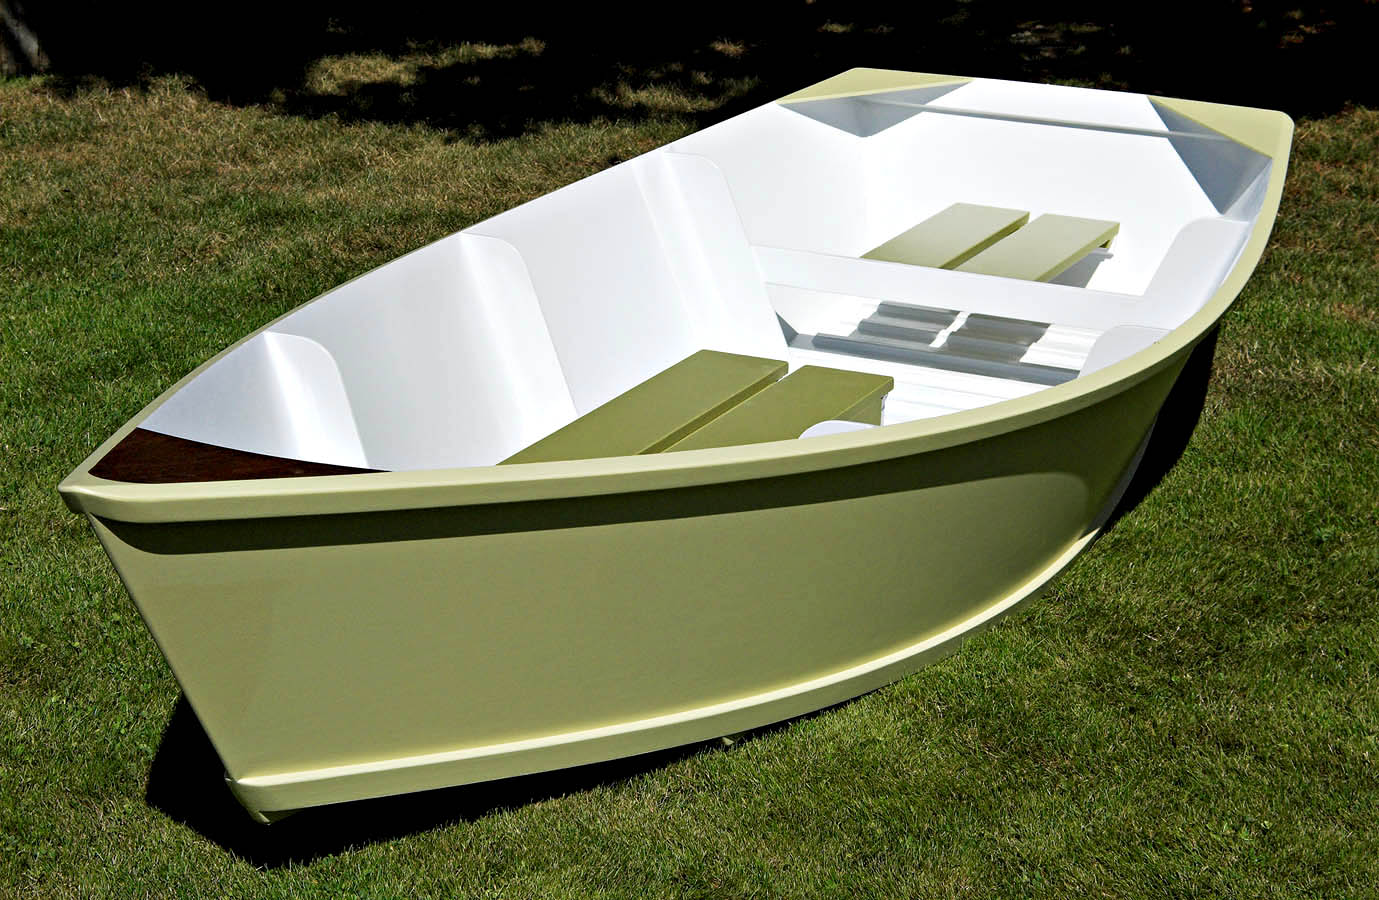 Free Boat Plans Using Plywood - bitsgin